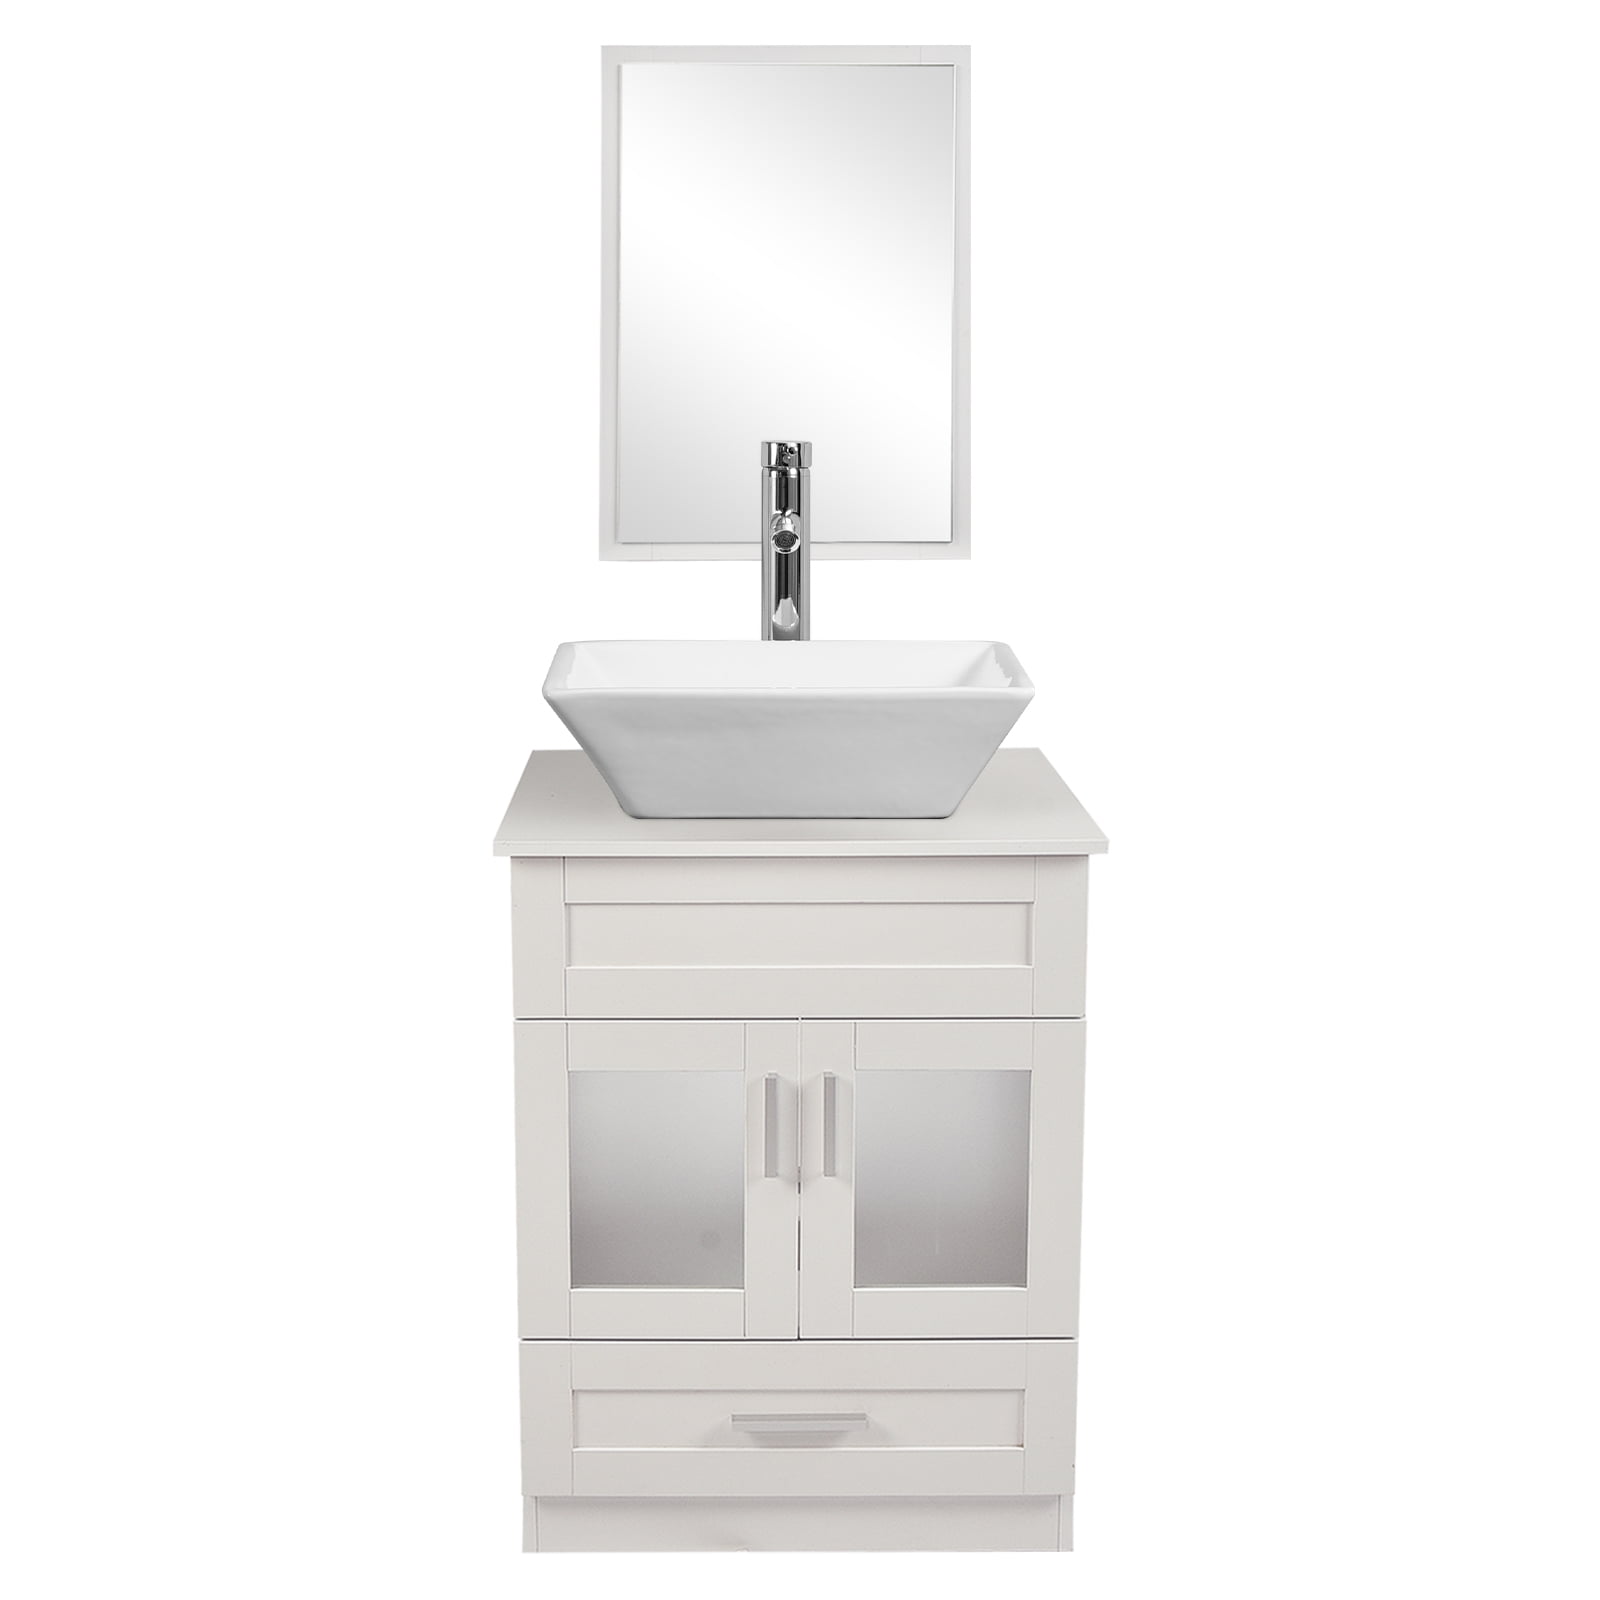 Elecwish 24 Inch Bathroom Vanity Set, Bathroom Vanity Cabinet Sets